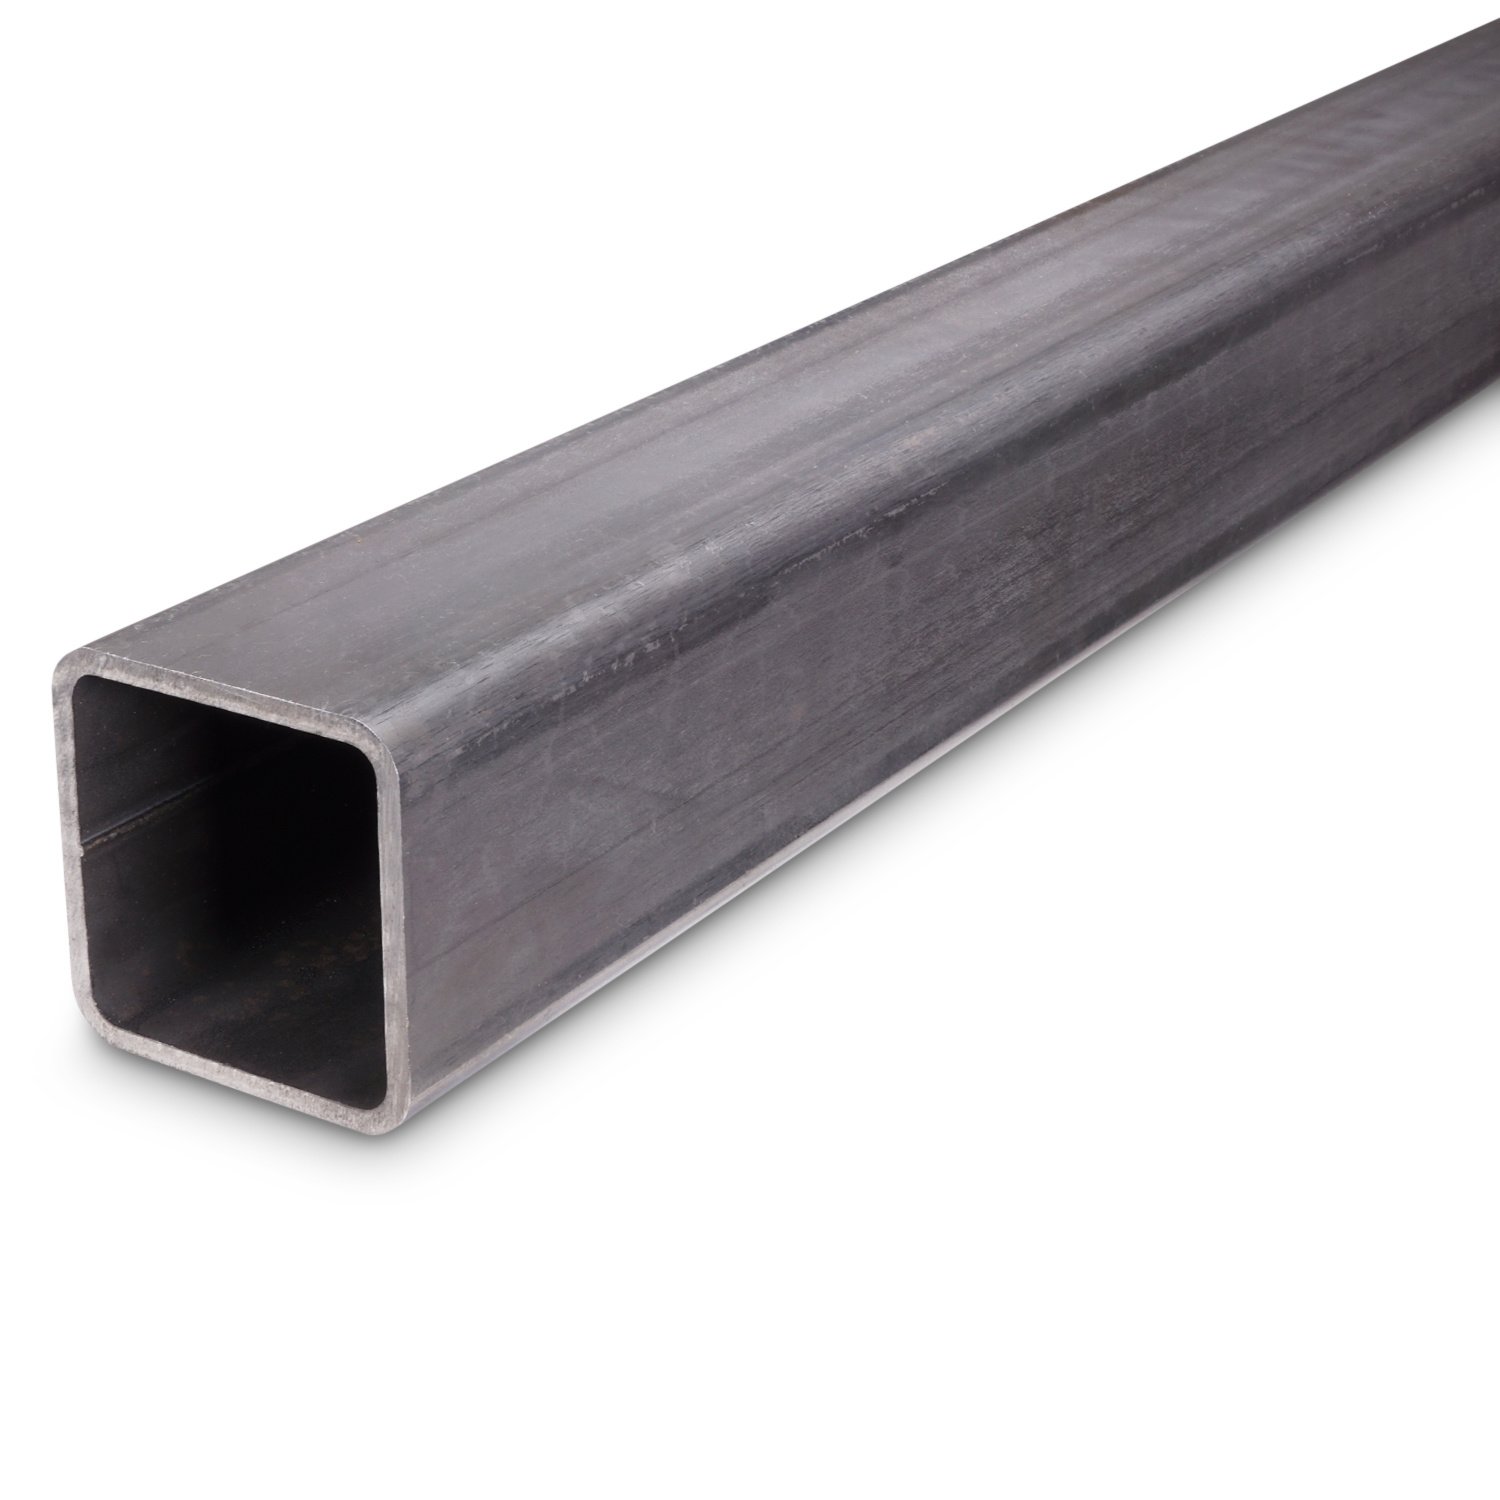  Koker staal - vierkante buis kokerprofiel KGV staal - S235JR - 80x80x4 MM